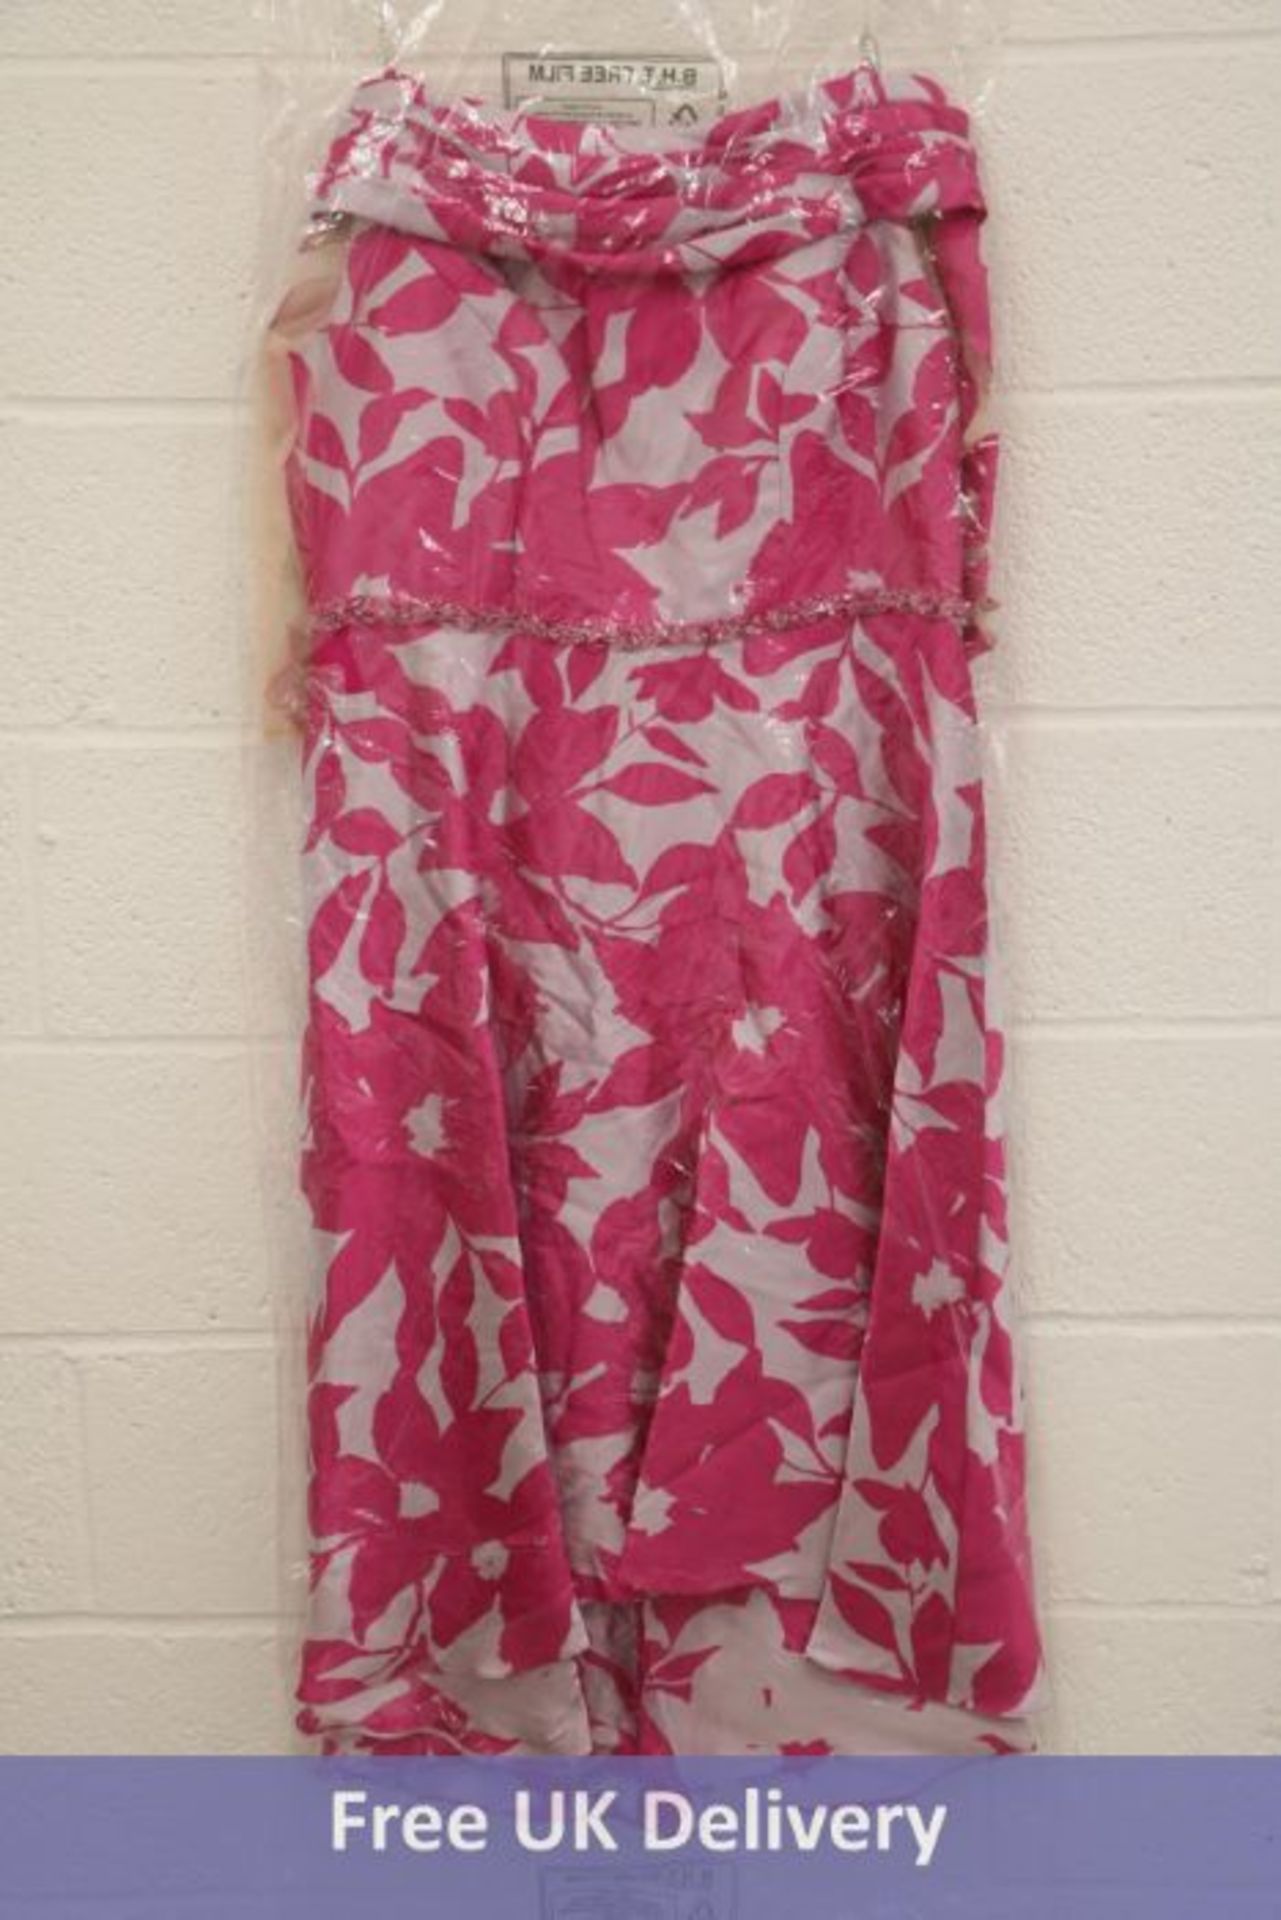 Irresistible Floral Print Dipped Hem Dress, Pink/Fuchsia, Size 10